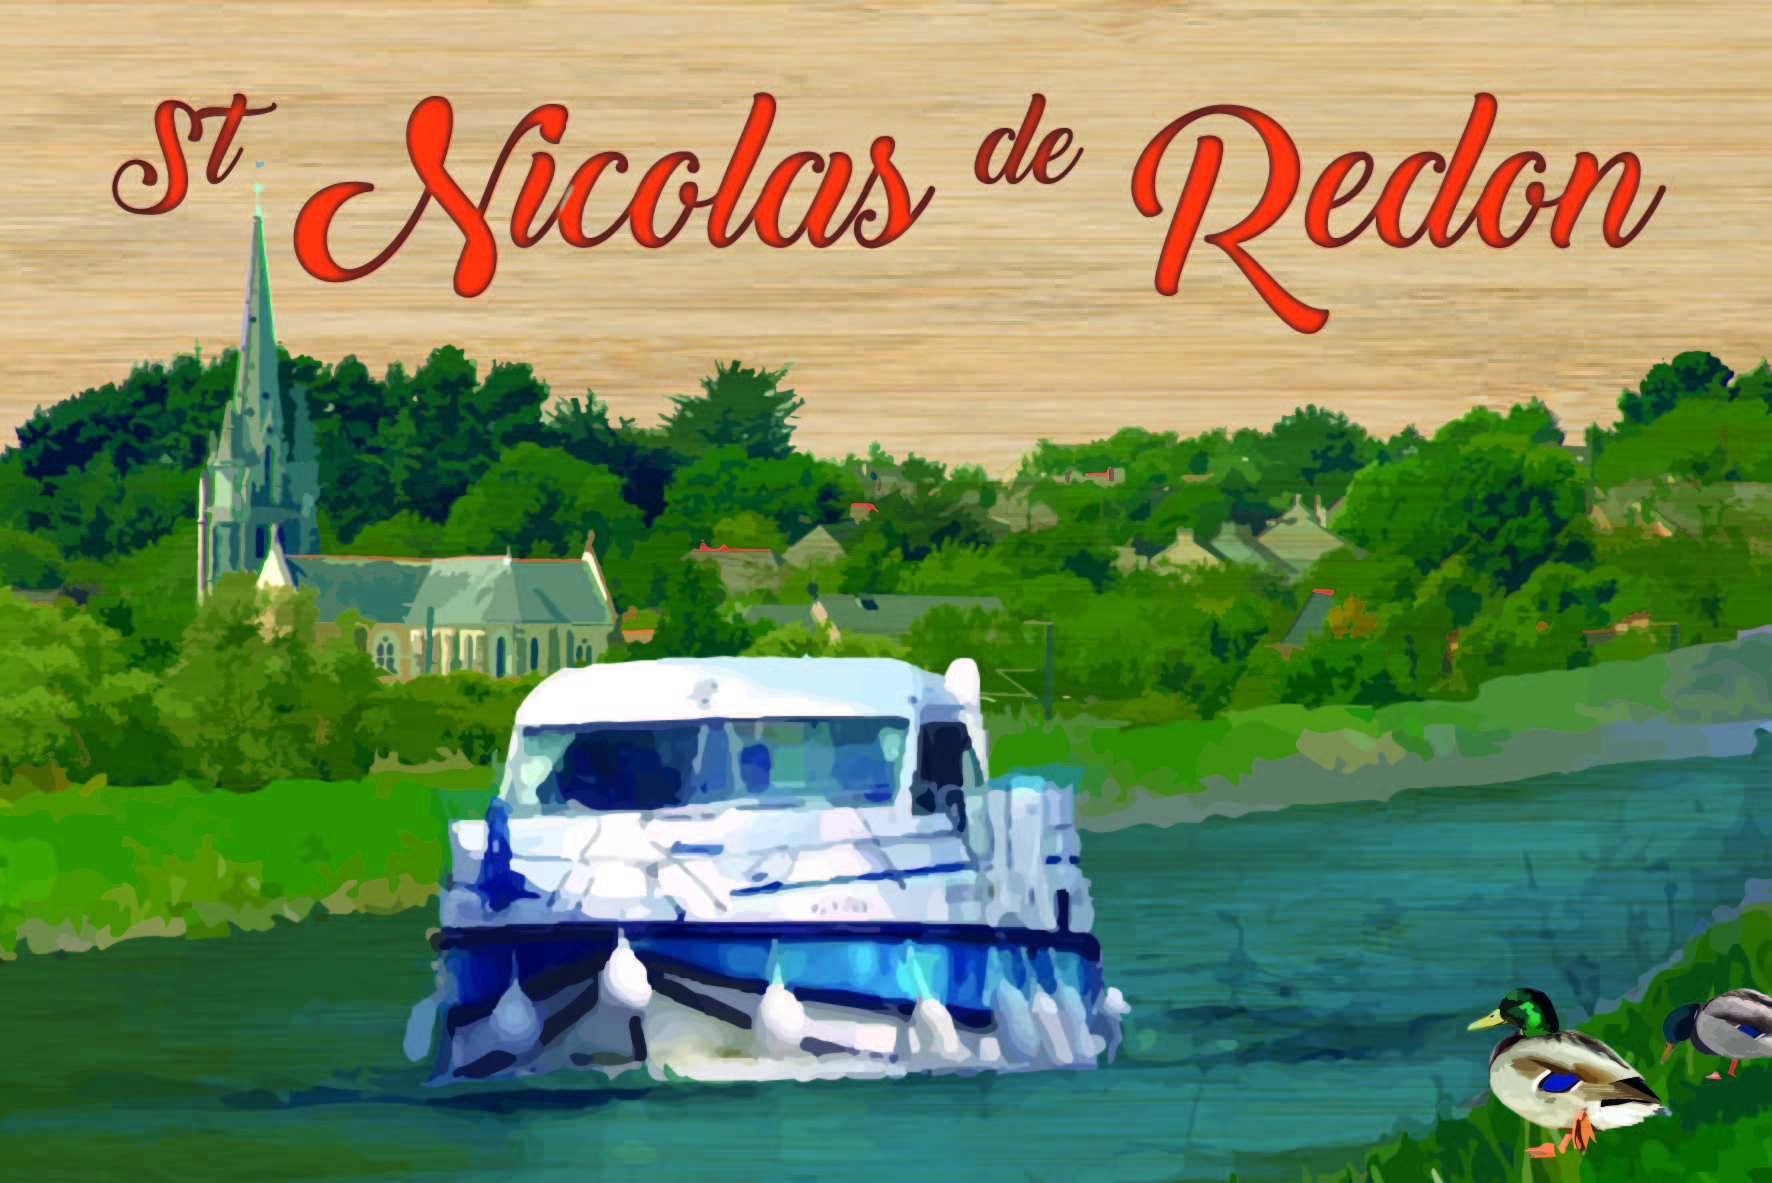 carte postale bois st Nicolas de Redon